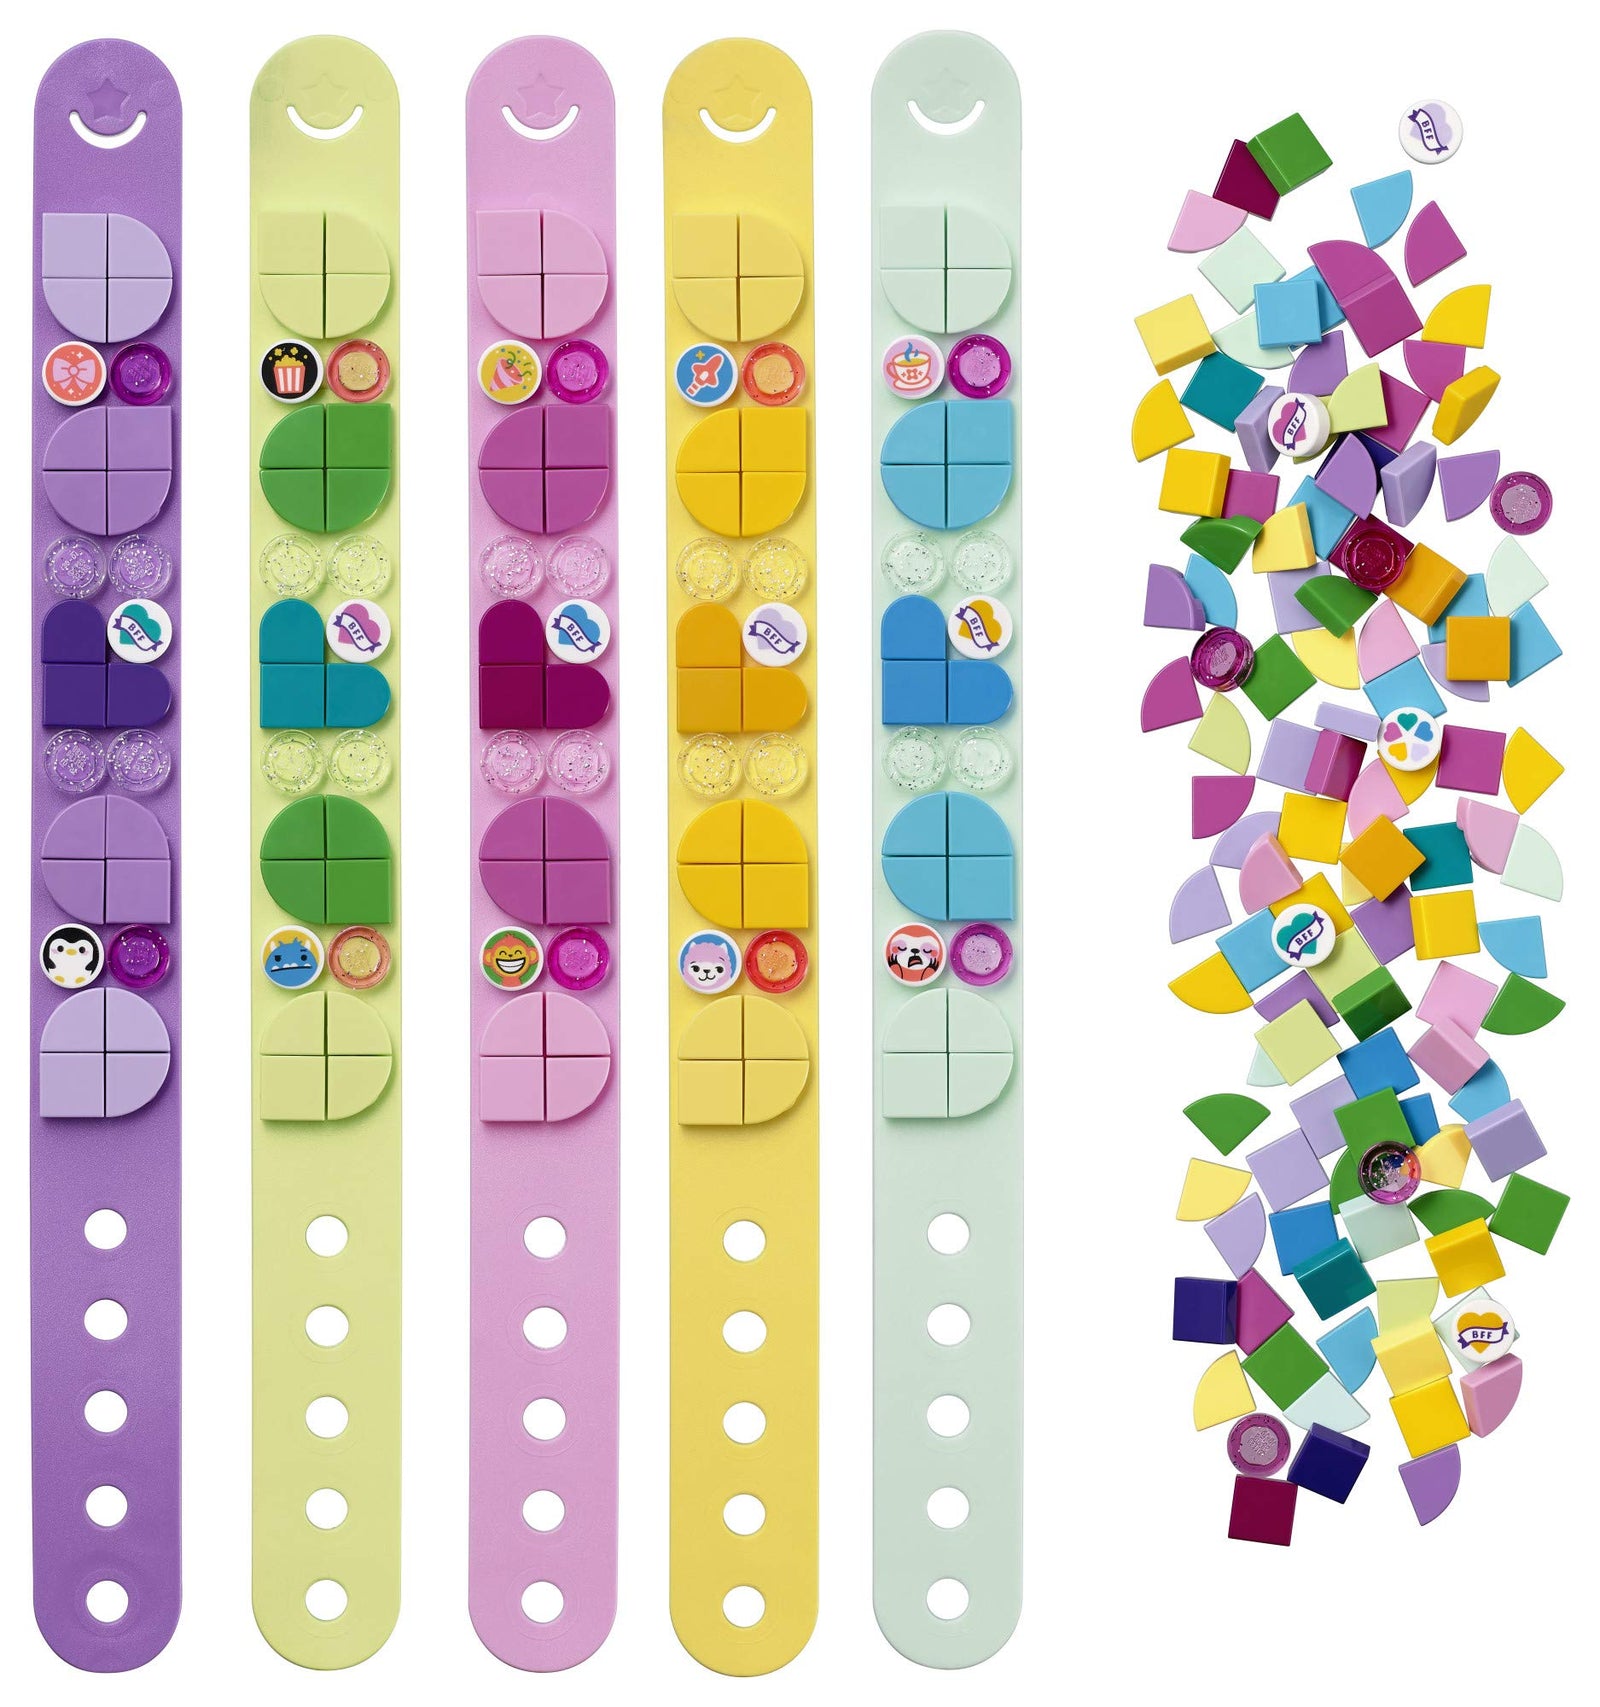 LEGO DOTS Bracelet Mega Pack 41913 DIY Creative Craft Bracelet Making Kit for Kids Who Love Arts and Crafts, Custom Friendship Bracelets Make a Great Birthday Gift (300 Pieces)